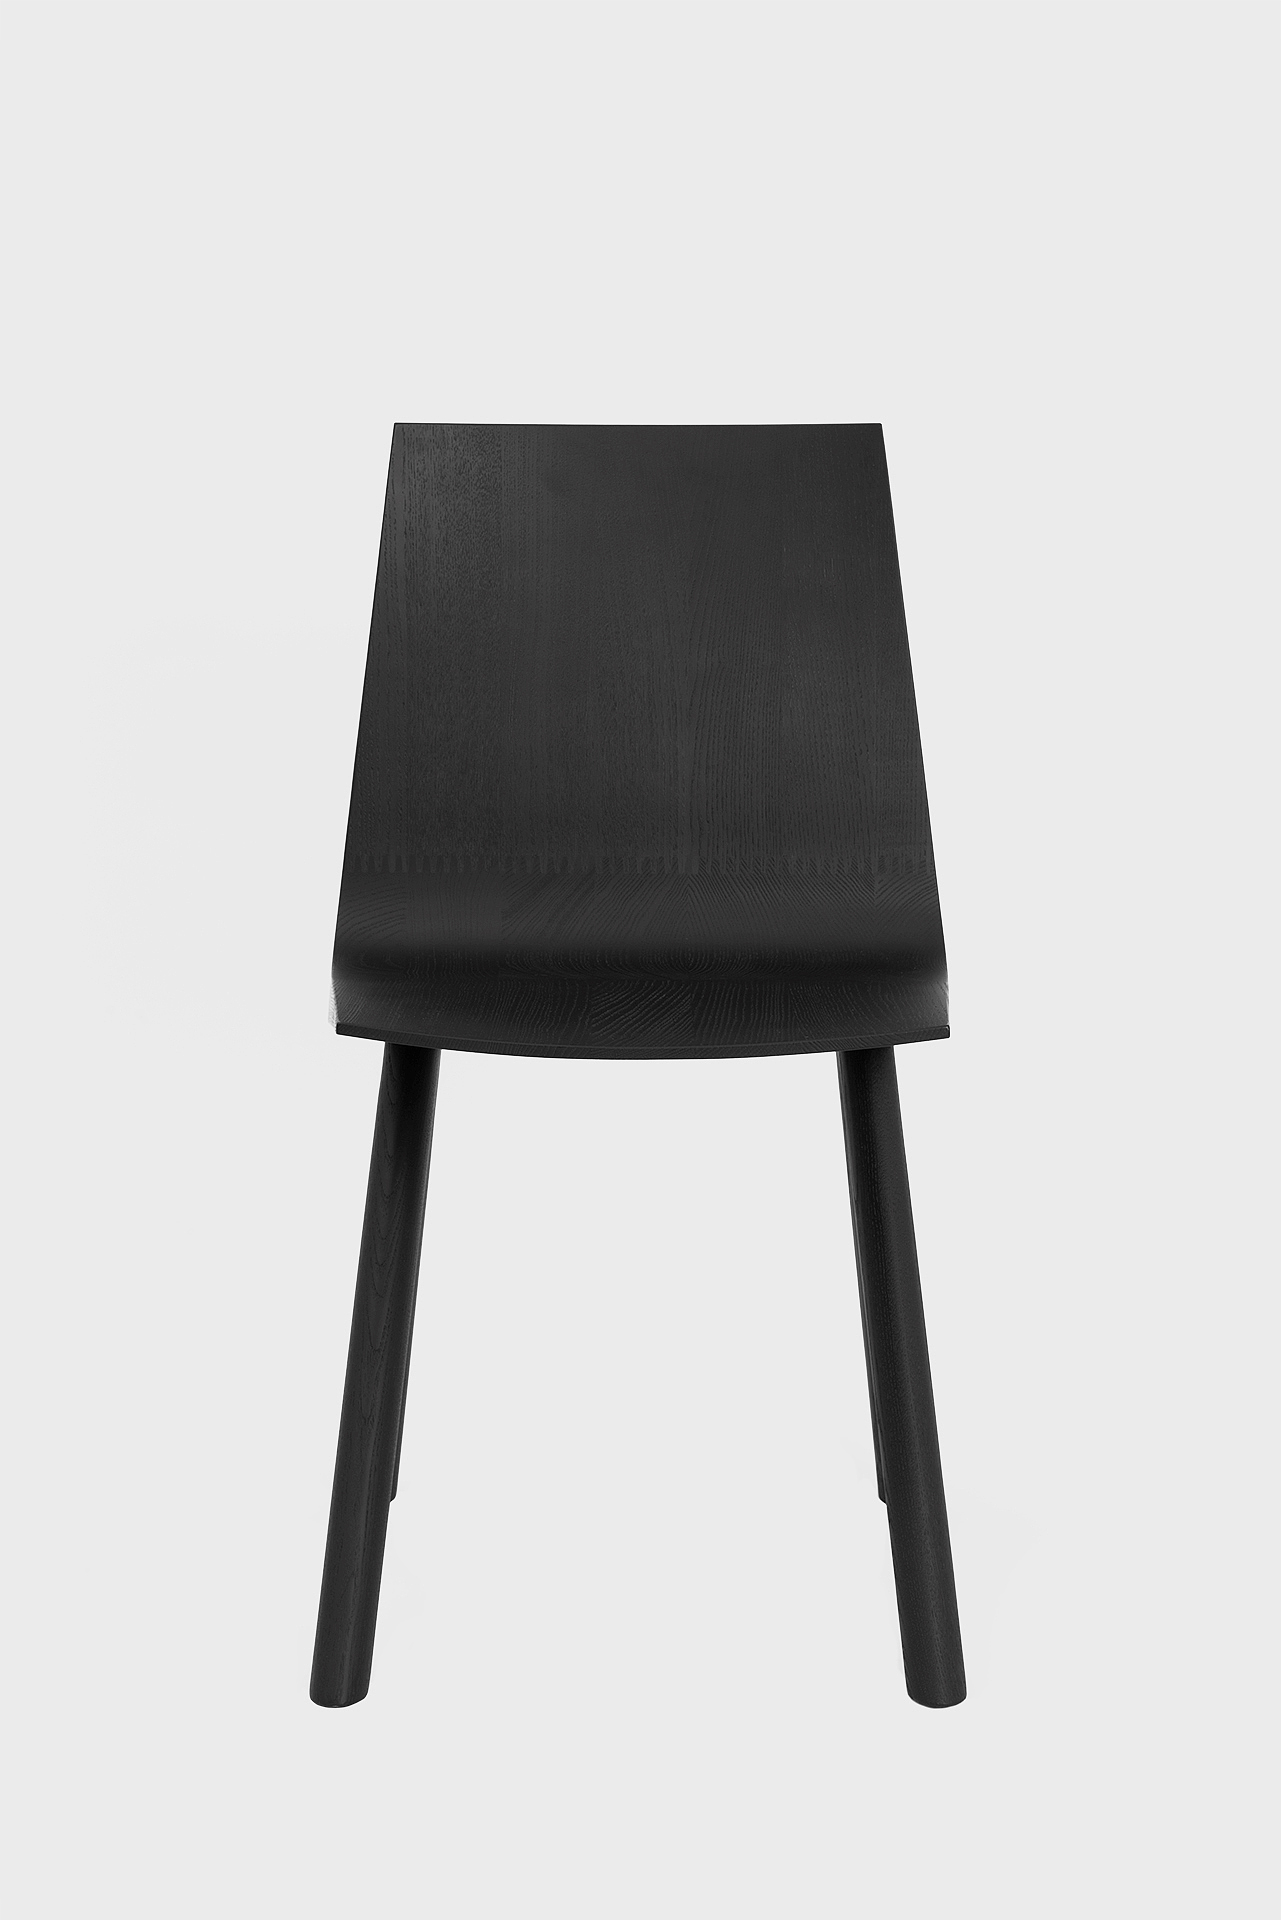 雕刻，Cresta，椅子，黑色，简约，